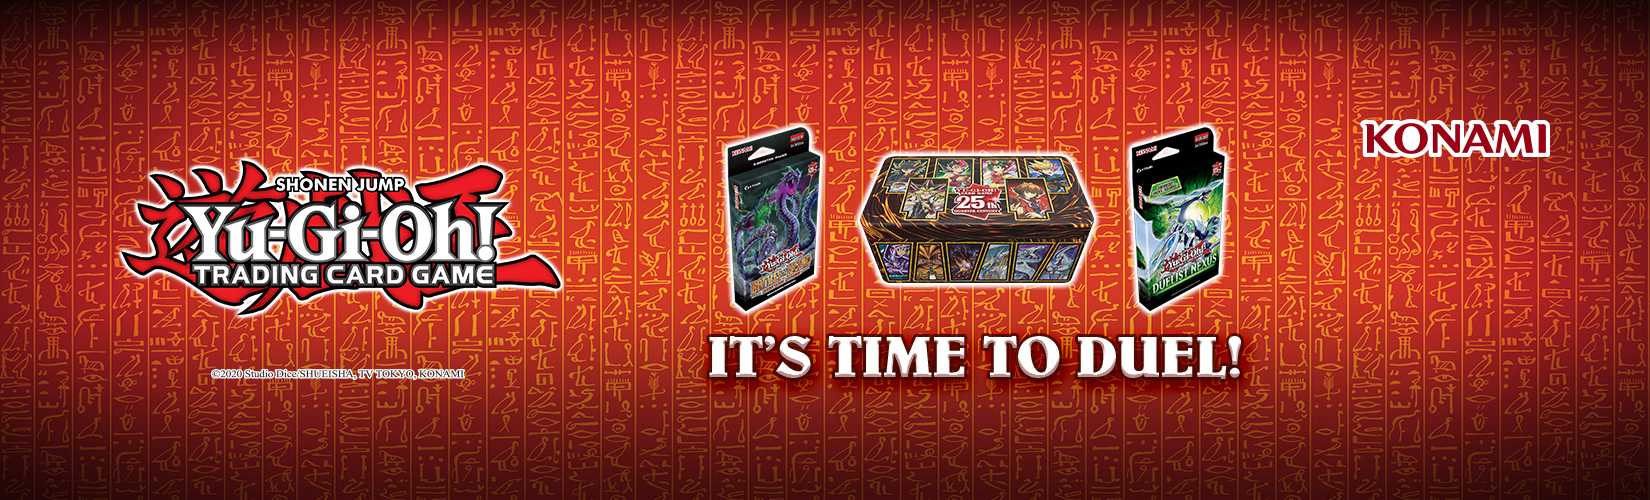 KONAMI. Yu-Gi-Oh! Trading card game. Its time to duel!